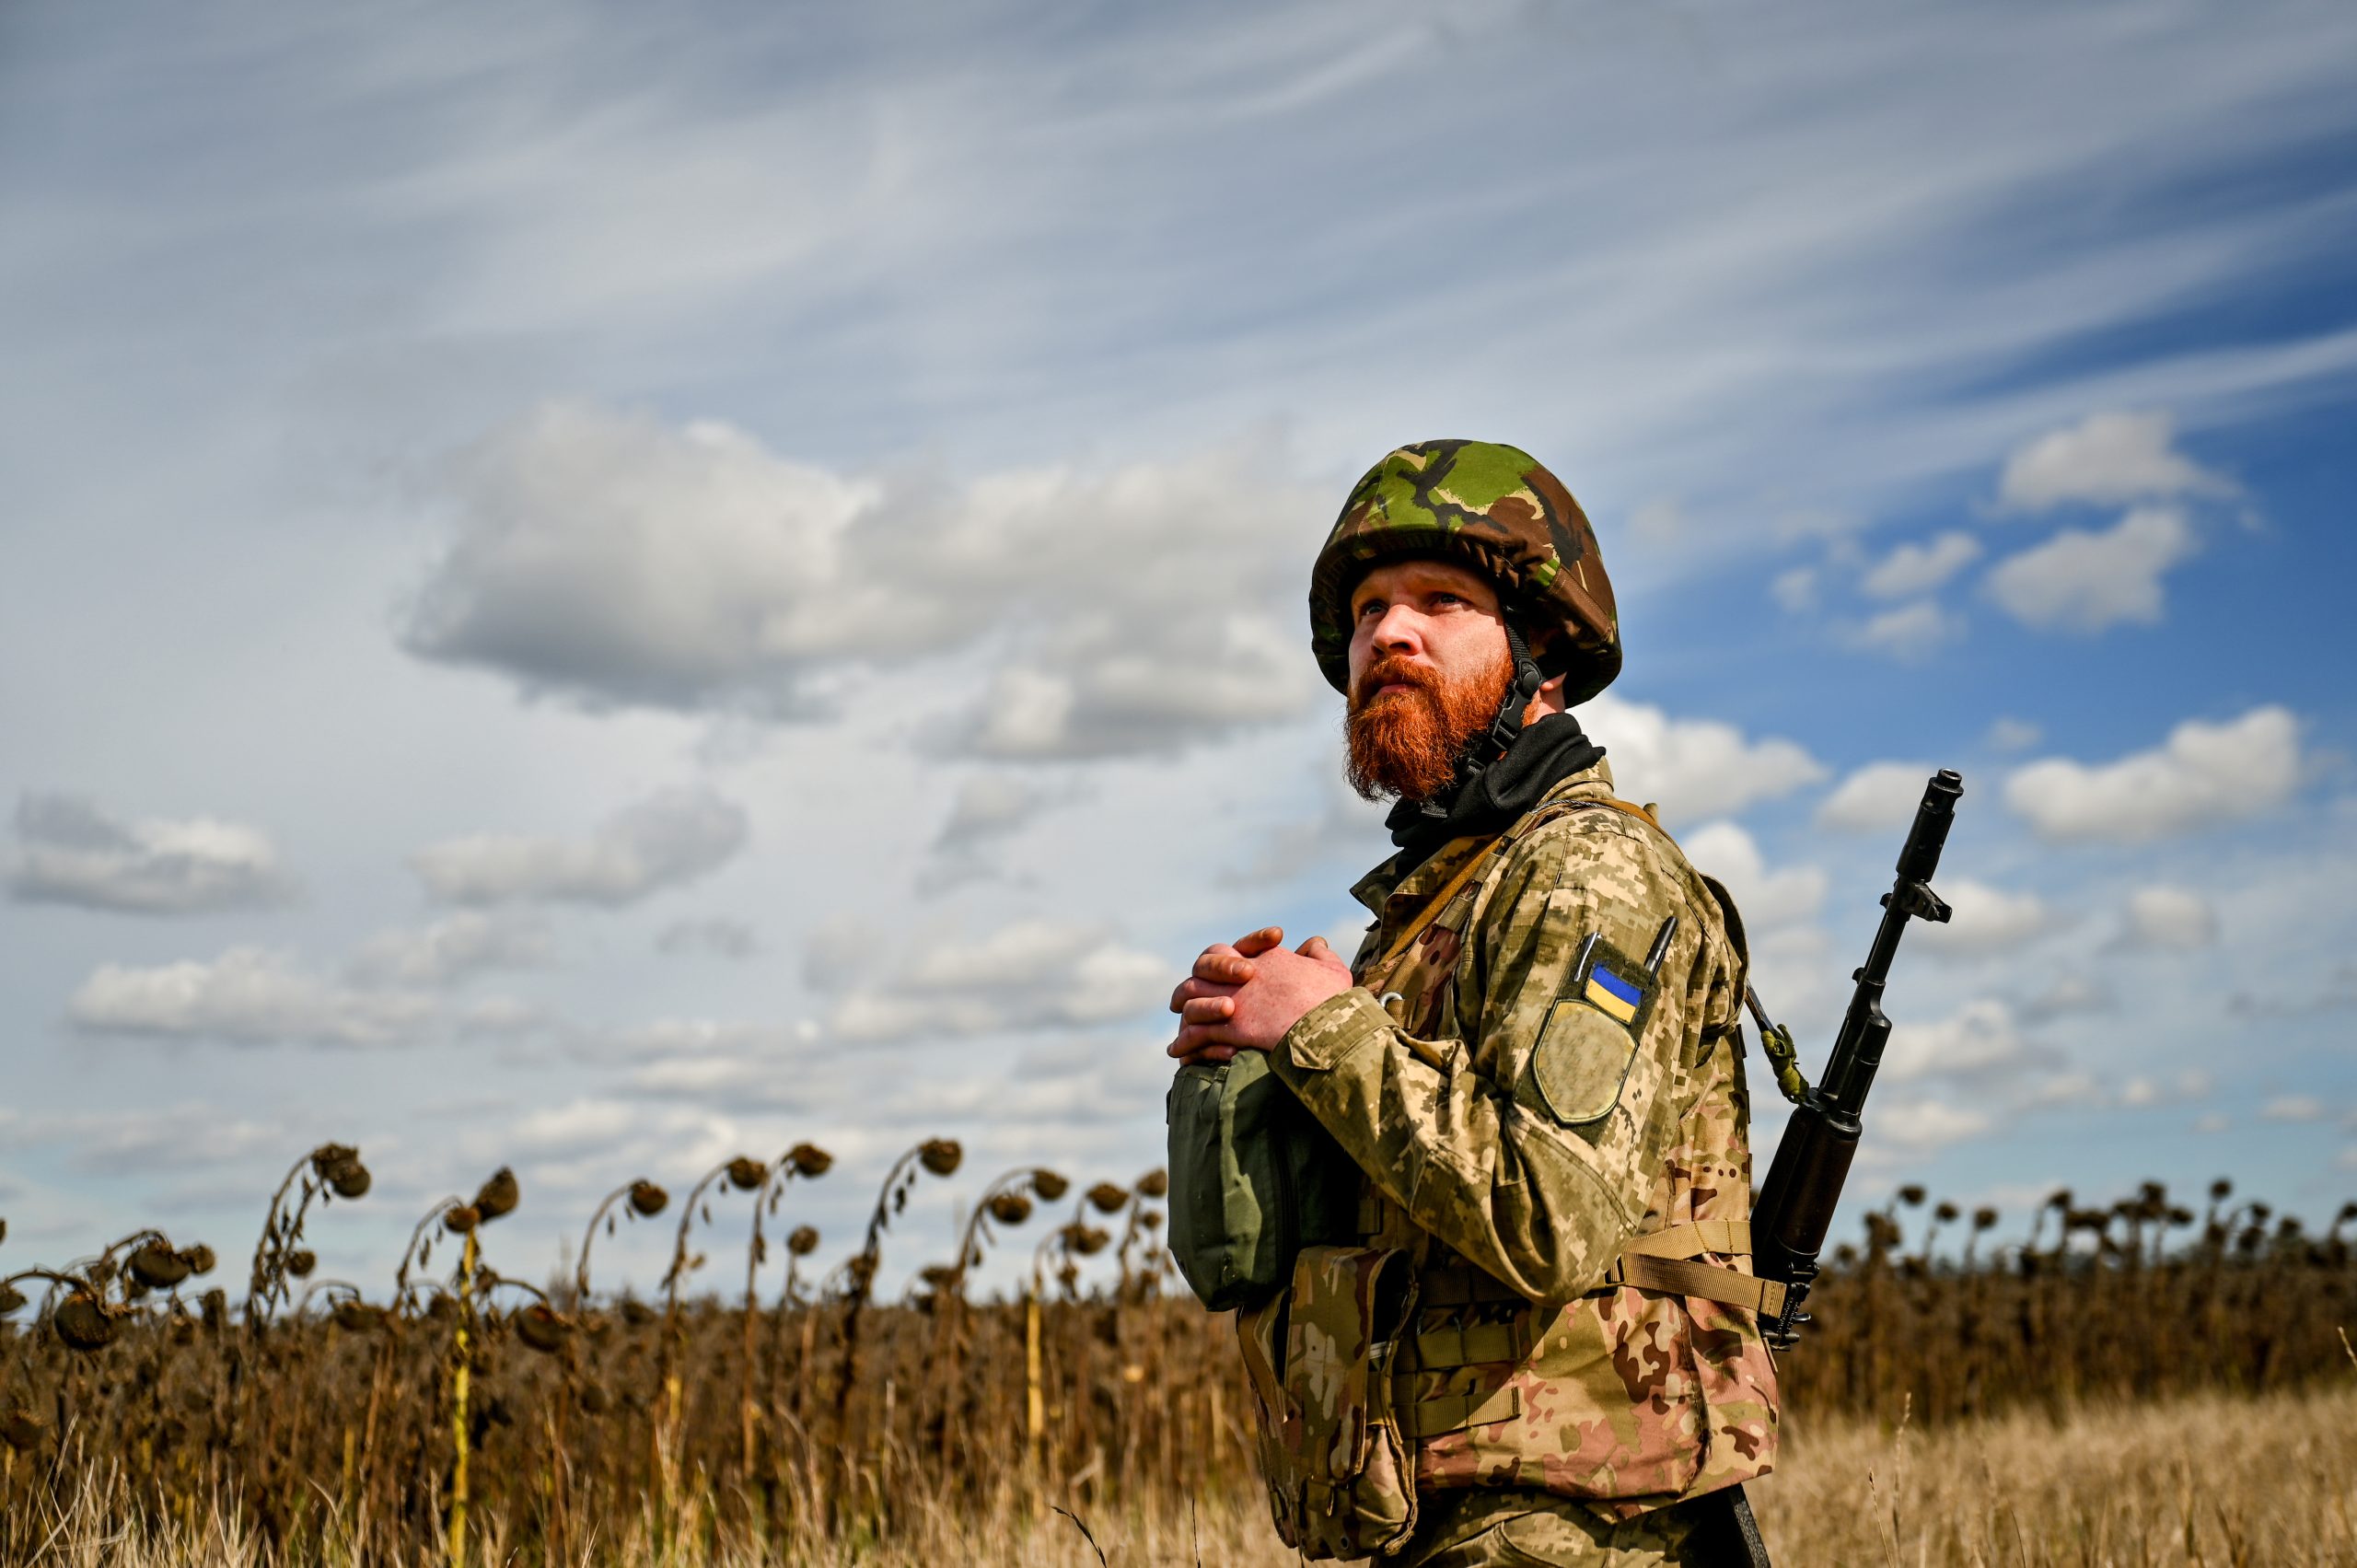 Photo: ZAPORIZHZHIA REGION, UKRAINE - OCTOBER 05, 2022 - A soldier of a military mortar crew stands on the border of a dry sunflower field, Zaporizhzhia Region, southeastern Ukraine. Credit: Dmytro Smoliyenko via Reuters Connect